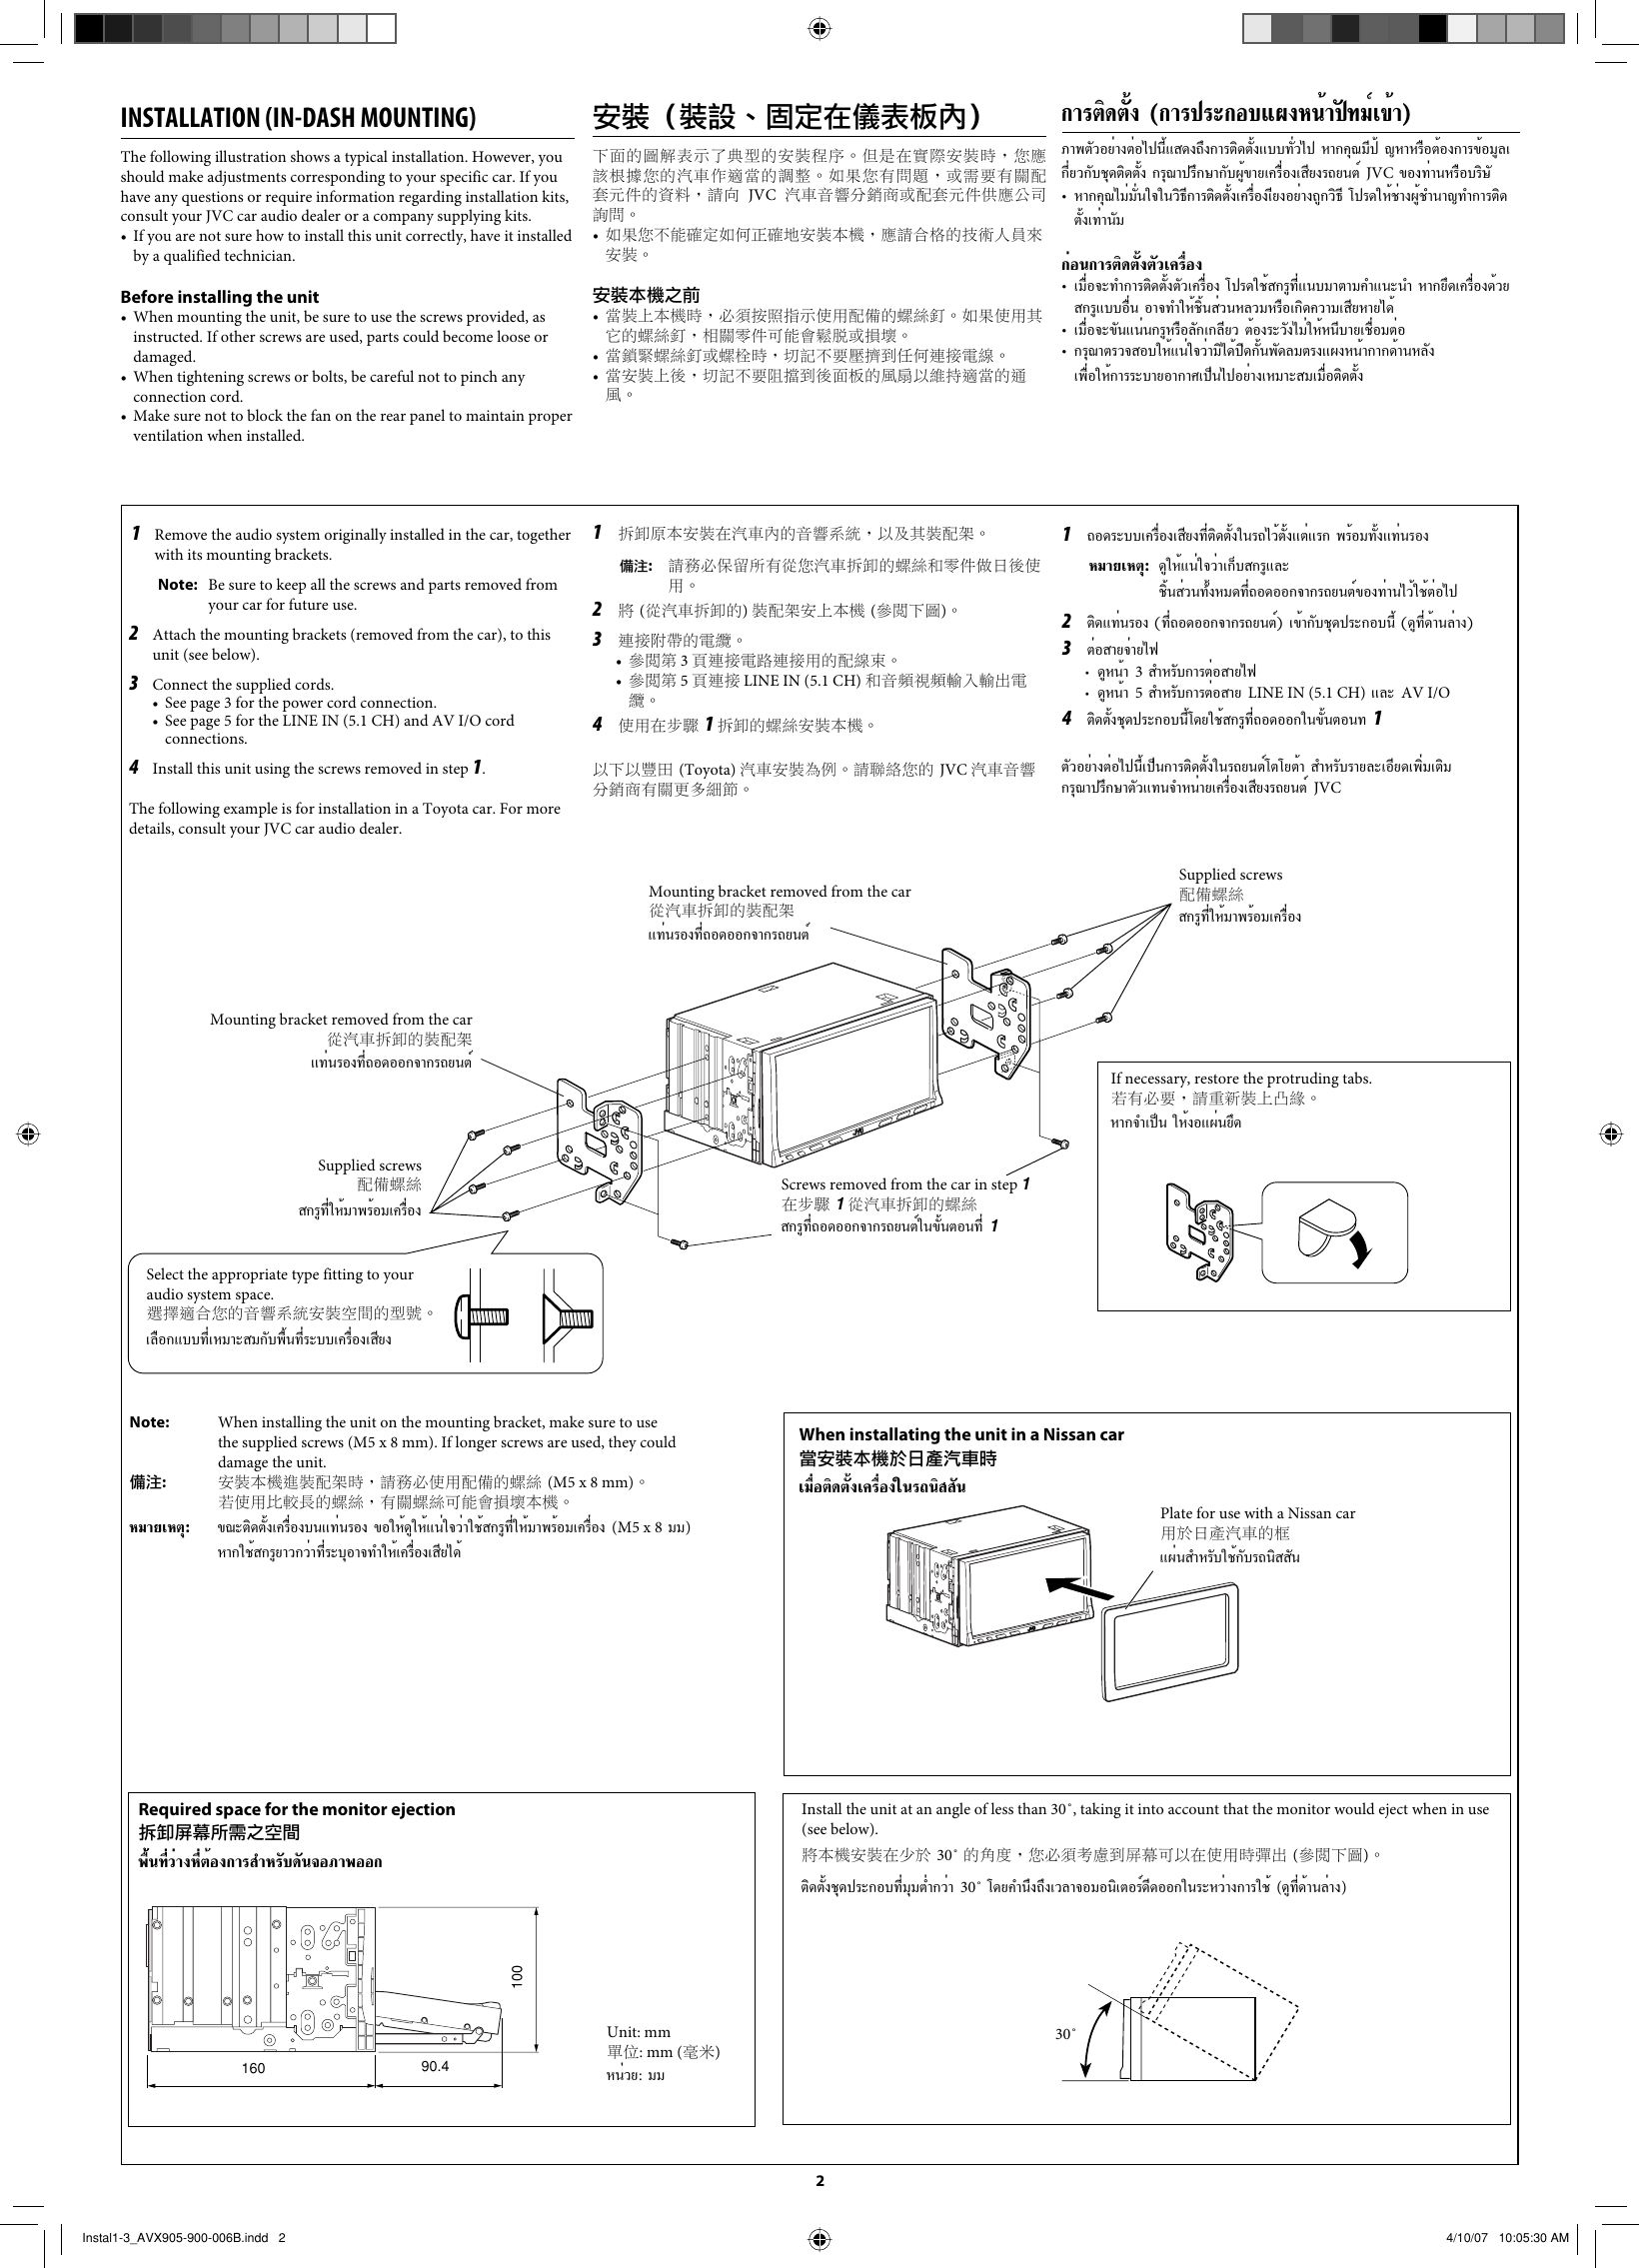 Page 2 of 6 - JVC KW-AVX900U KW-AVX905/KW-AVX900[U] User Manual KW-AVX900U, KW-AVX905U LVT1670-006B